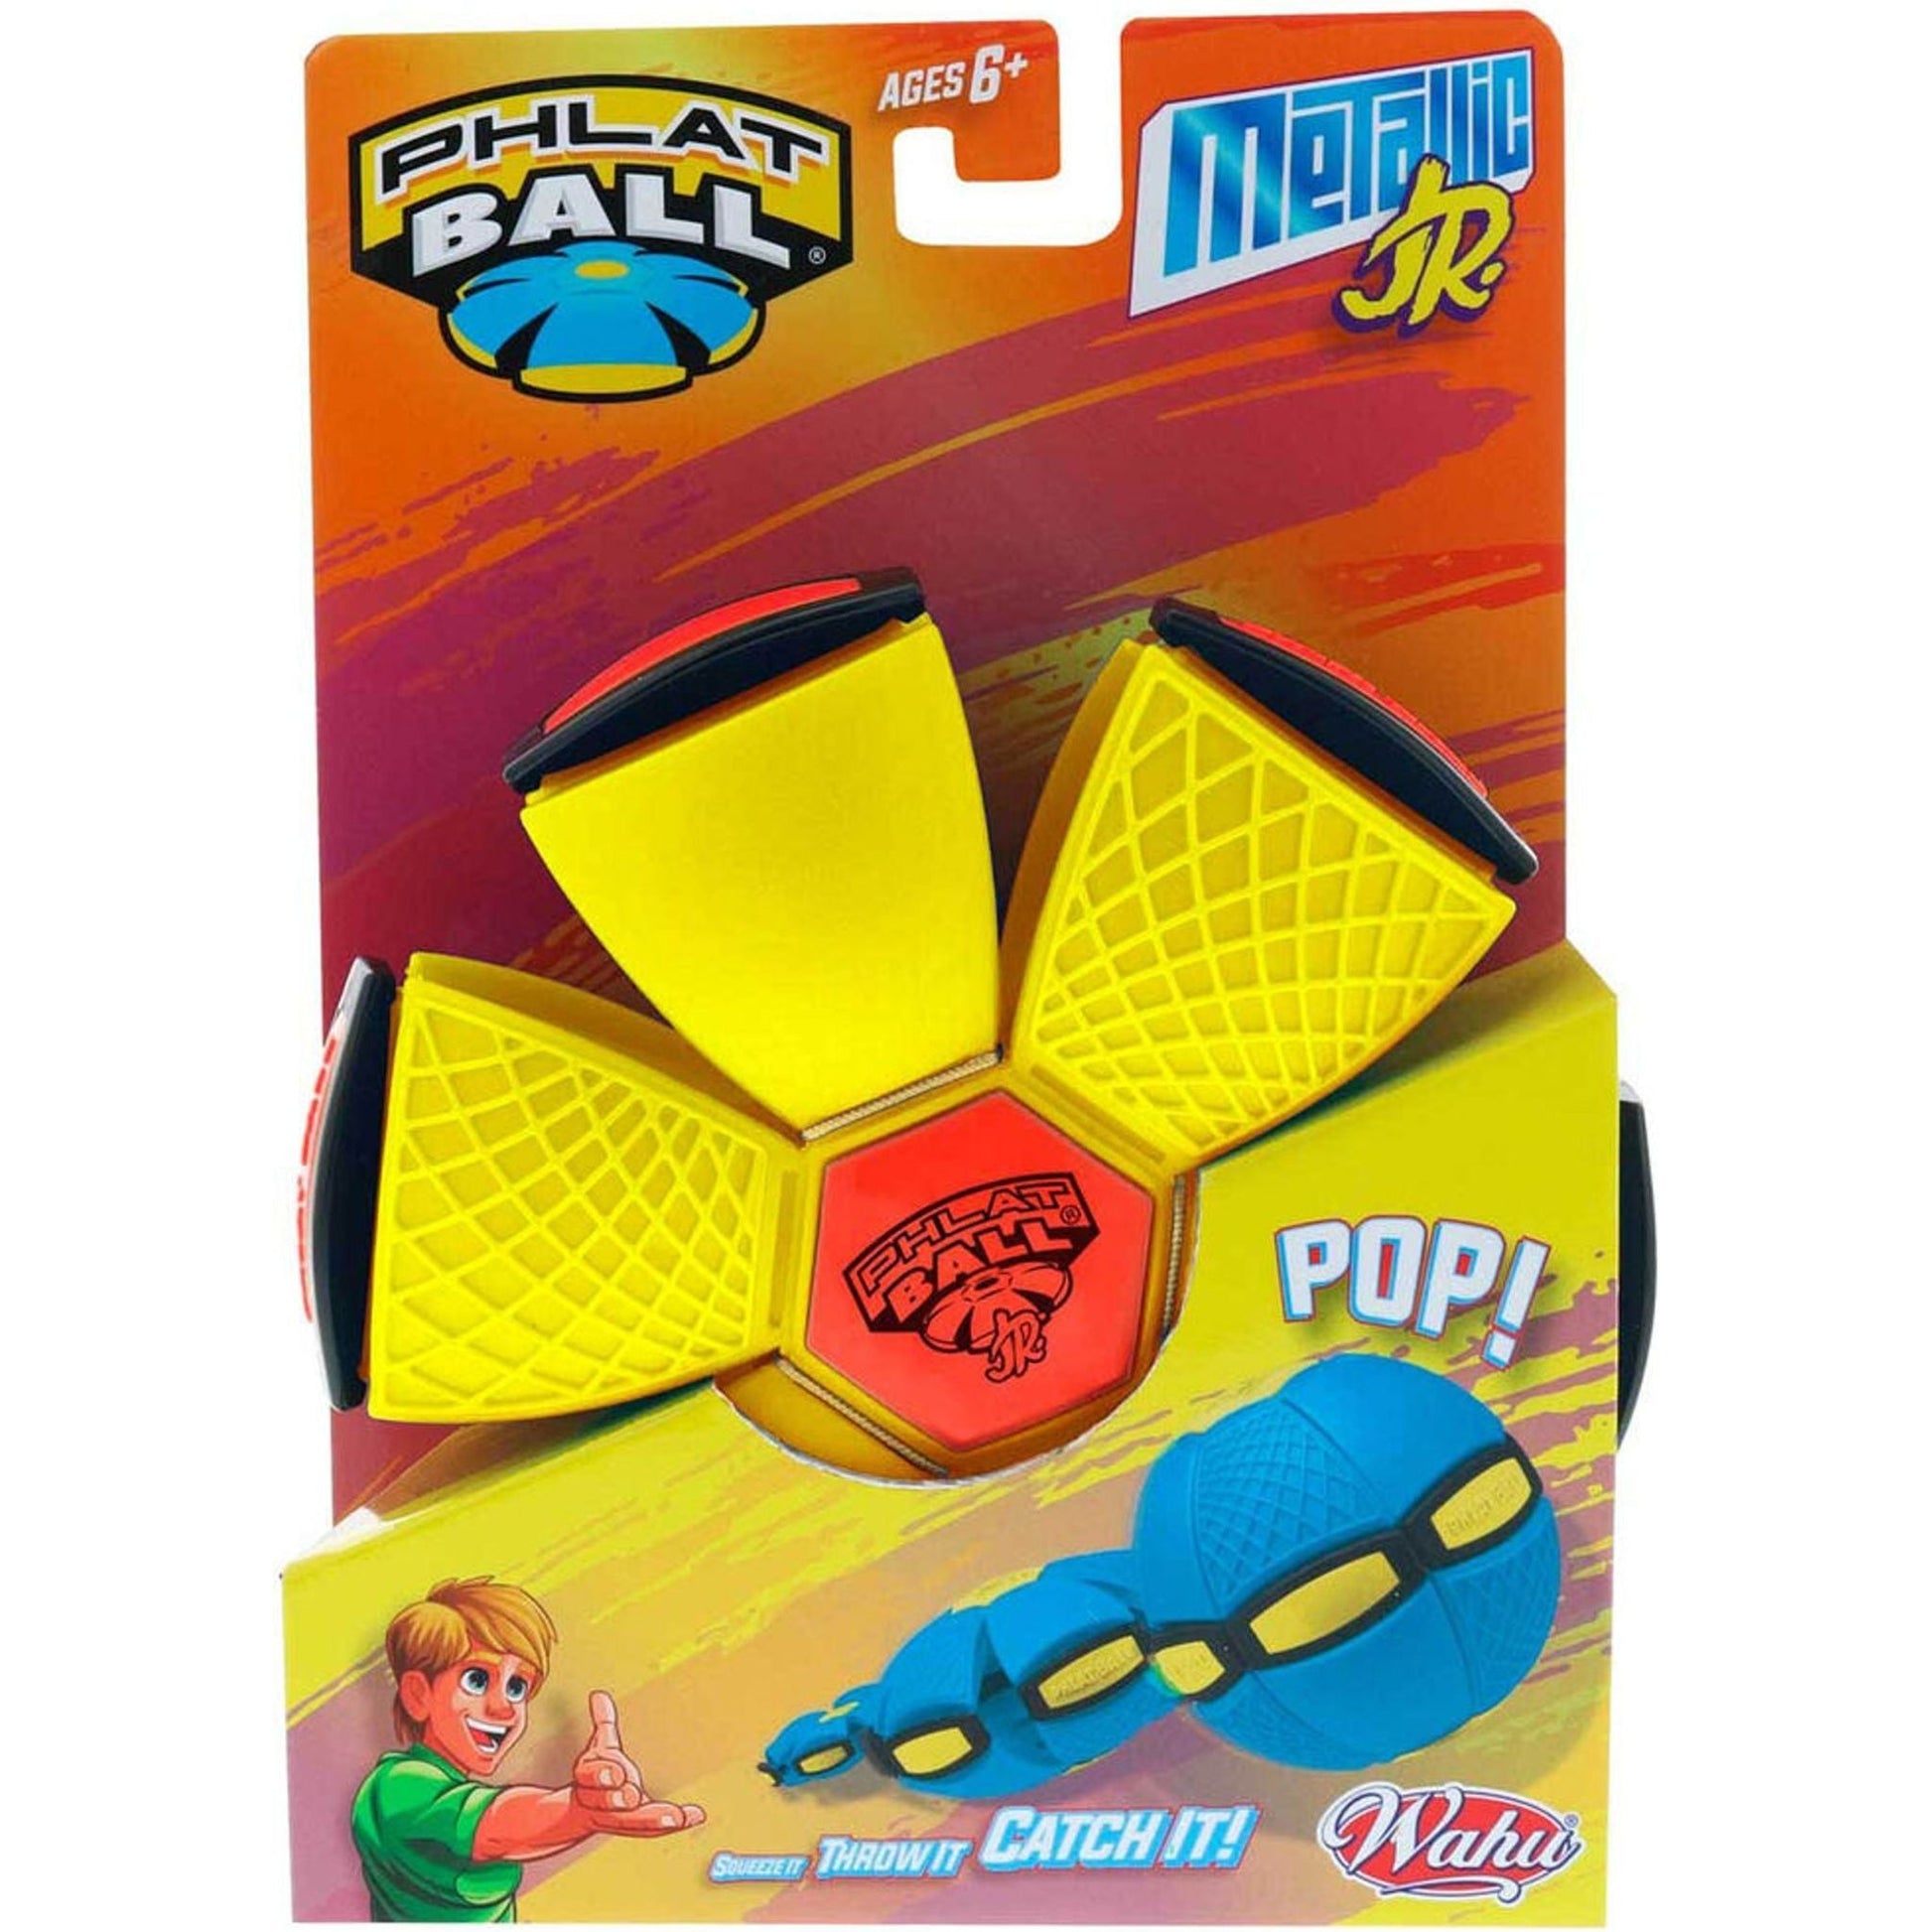 PHLAT BALL - The Toy Box